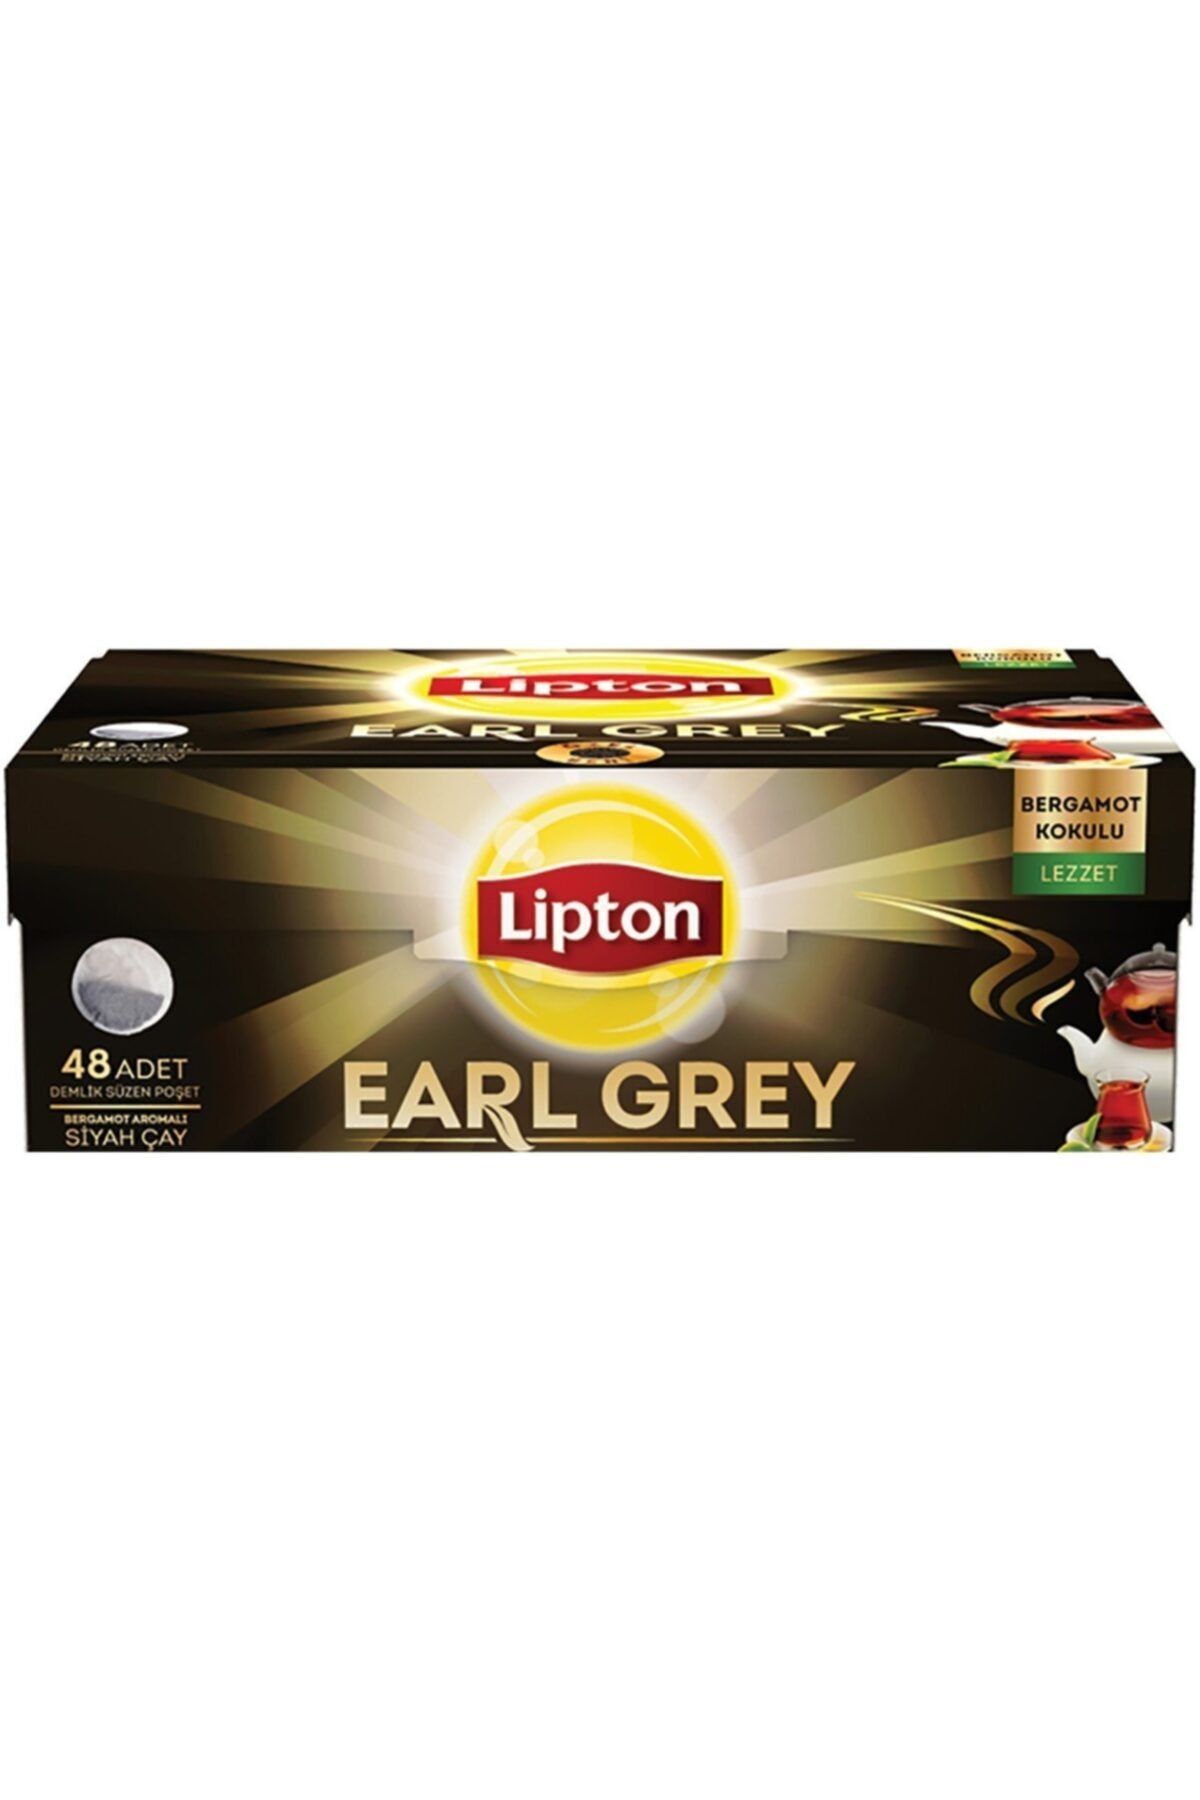 Lipton Demlik Poşet Çay Earl Grey 48'li